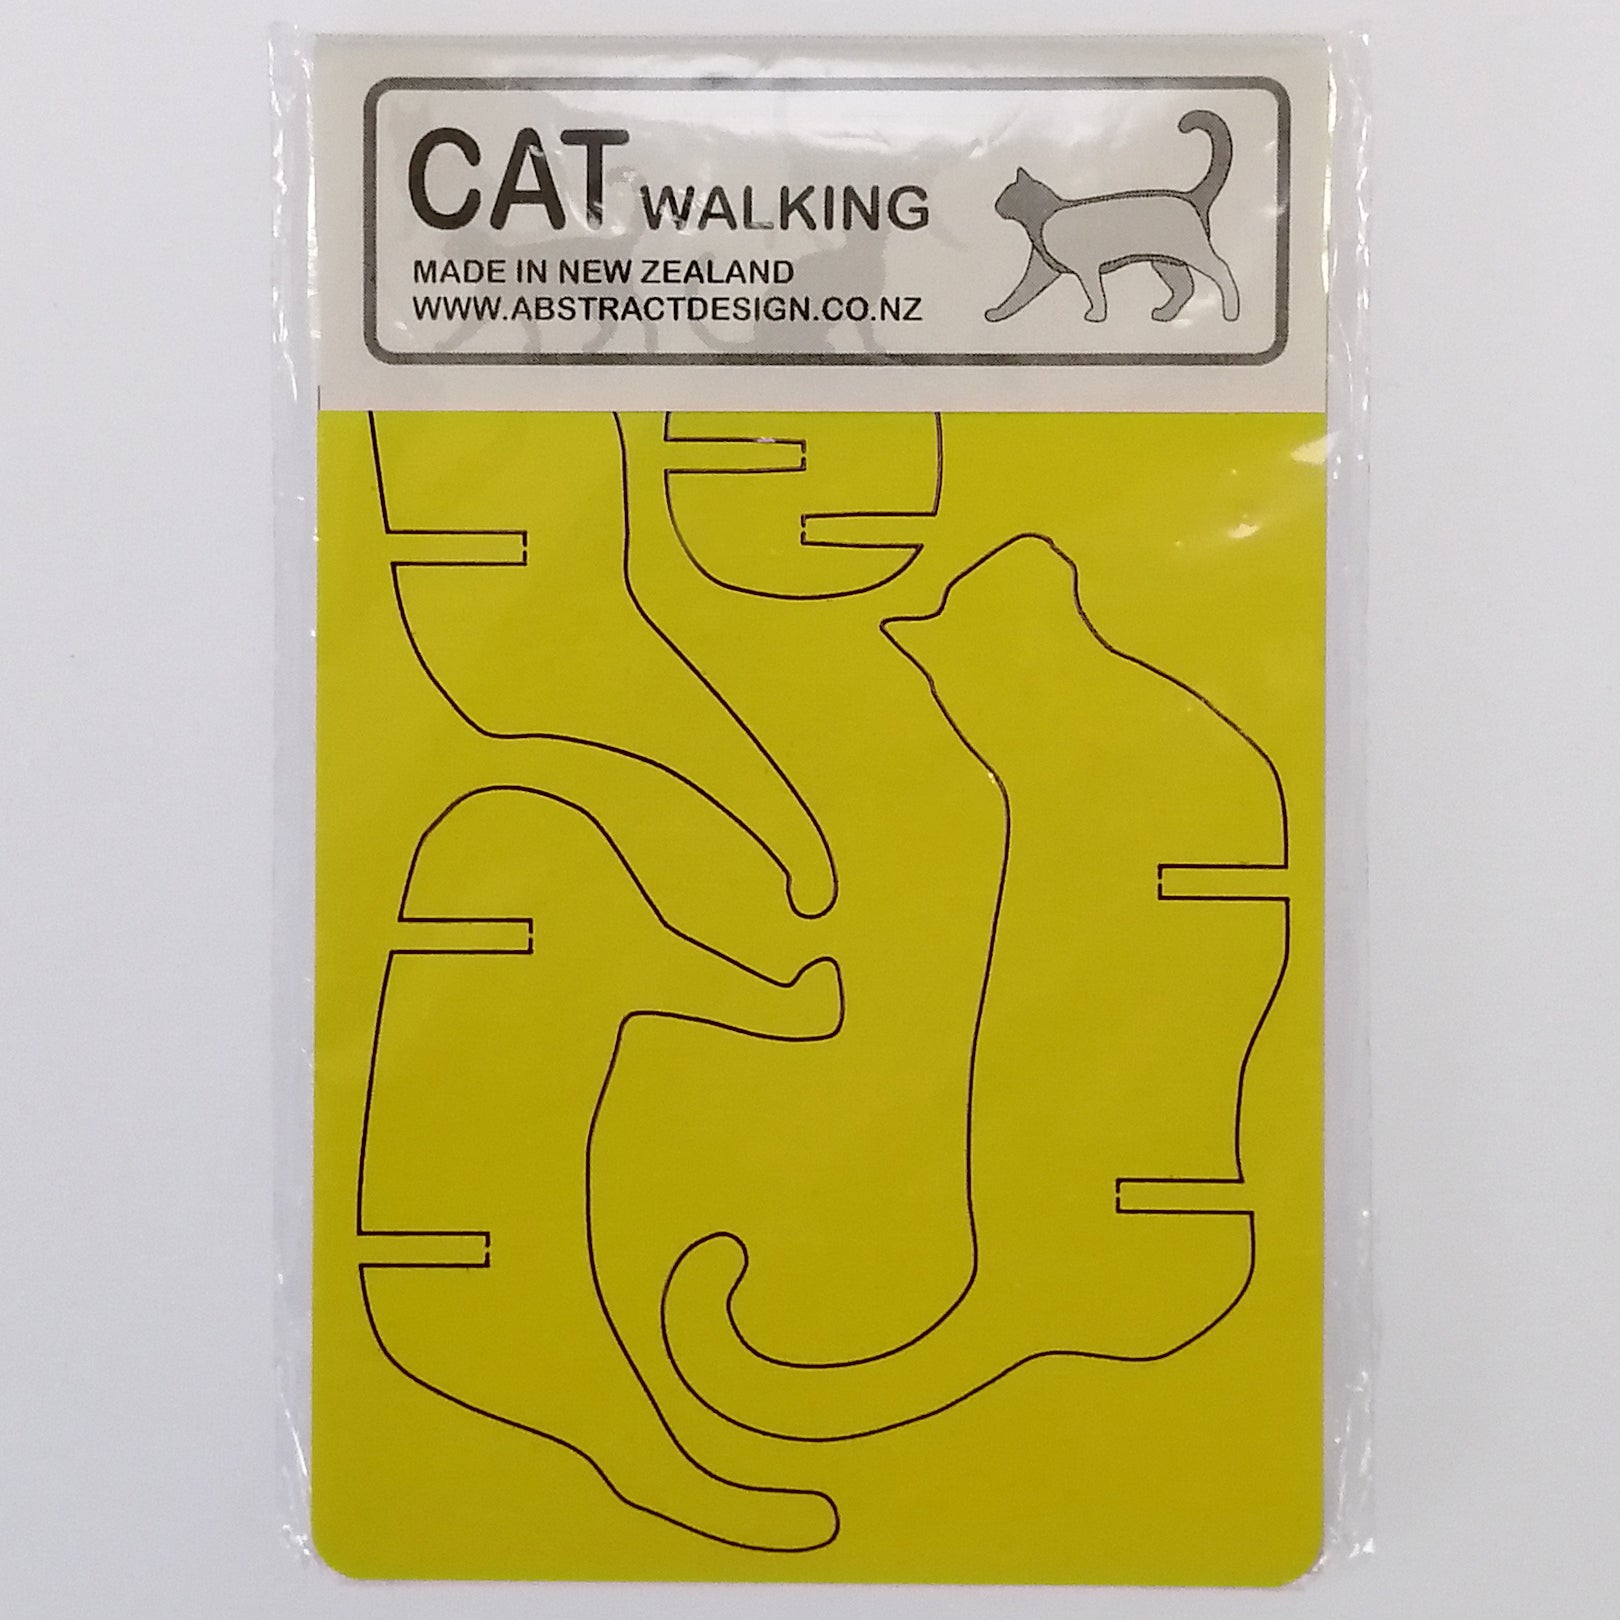 Flat-pack Kitset Wooden Model - Cat Walking - Yellow